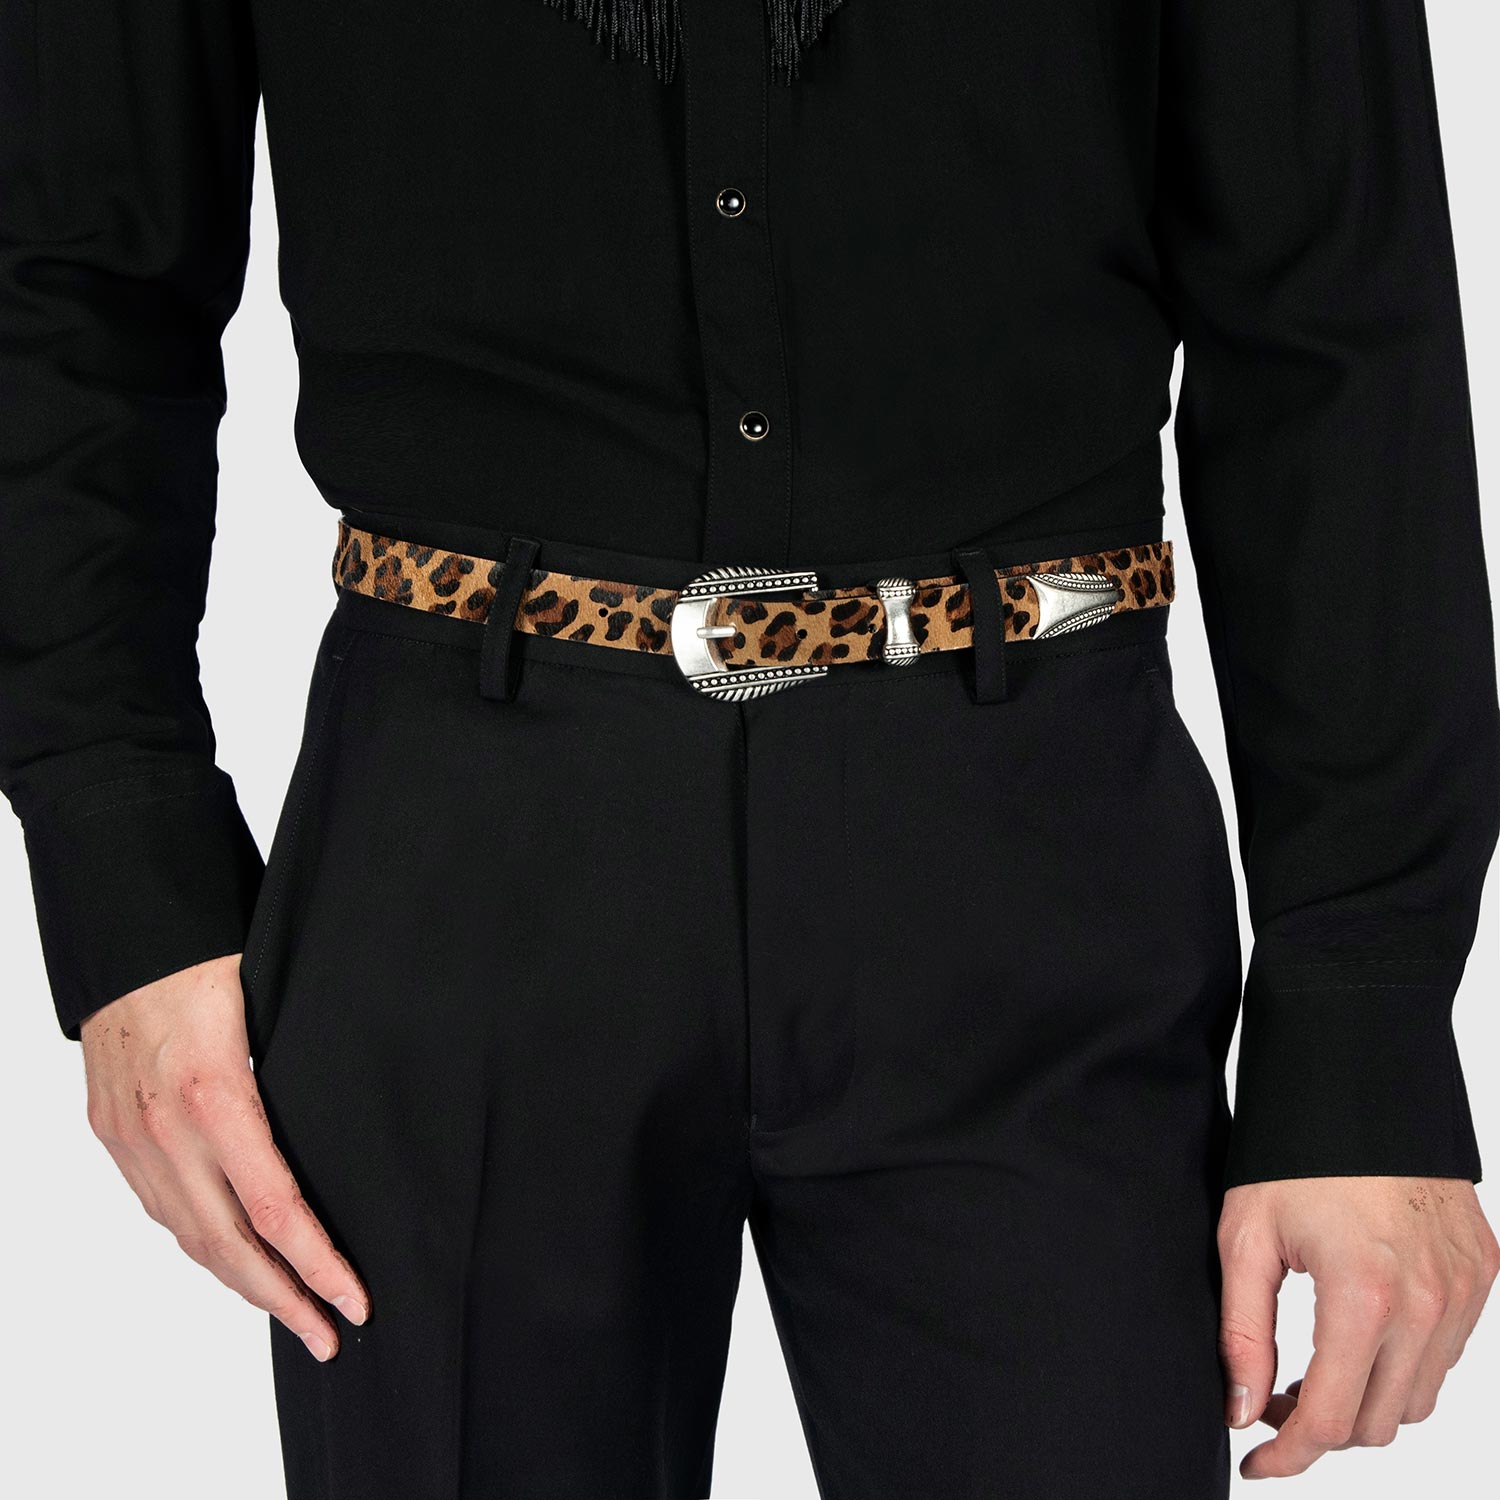 Calvera - Leopard Print Leather Belt | Straight To Hell Apparel